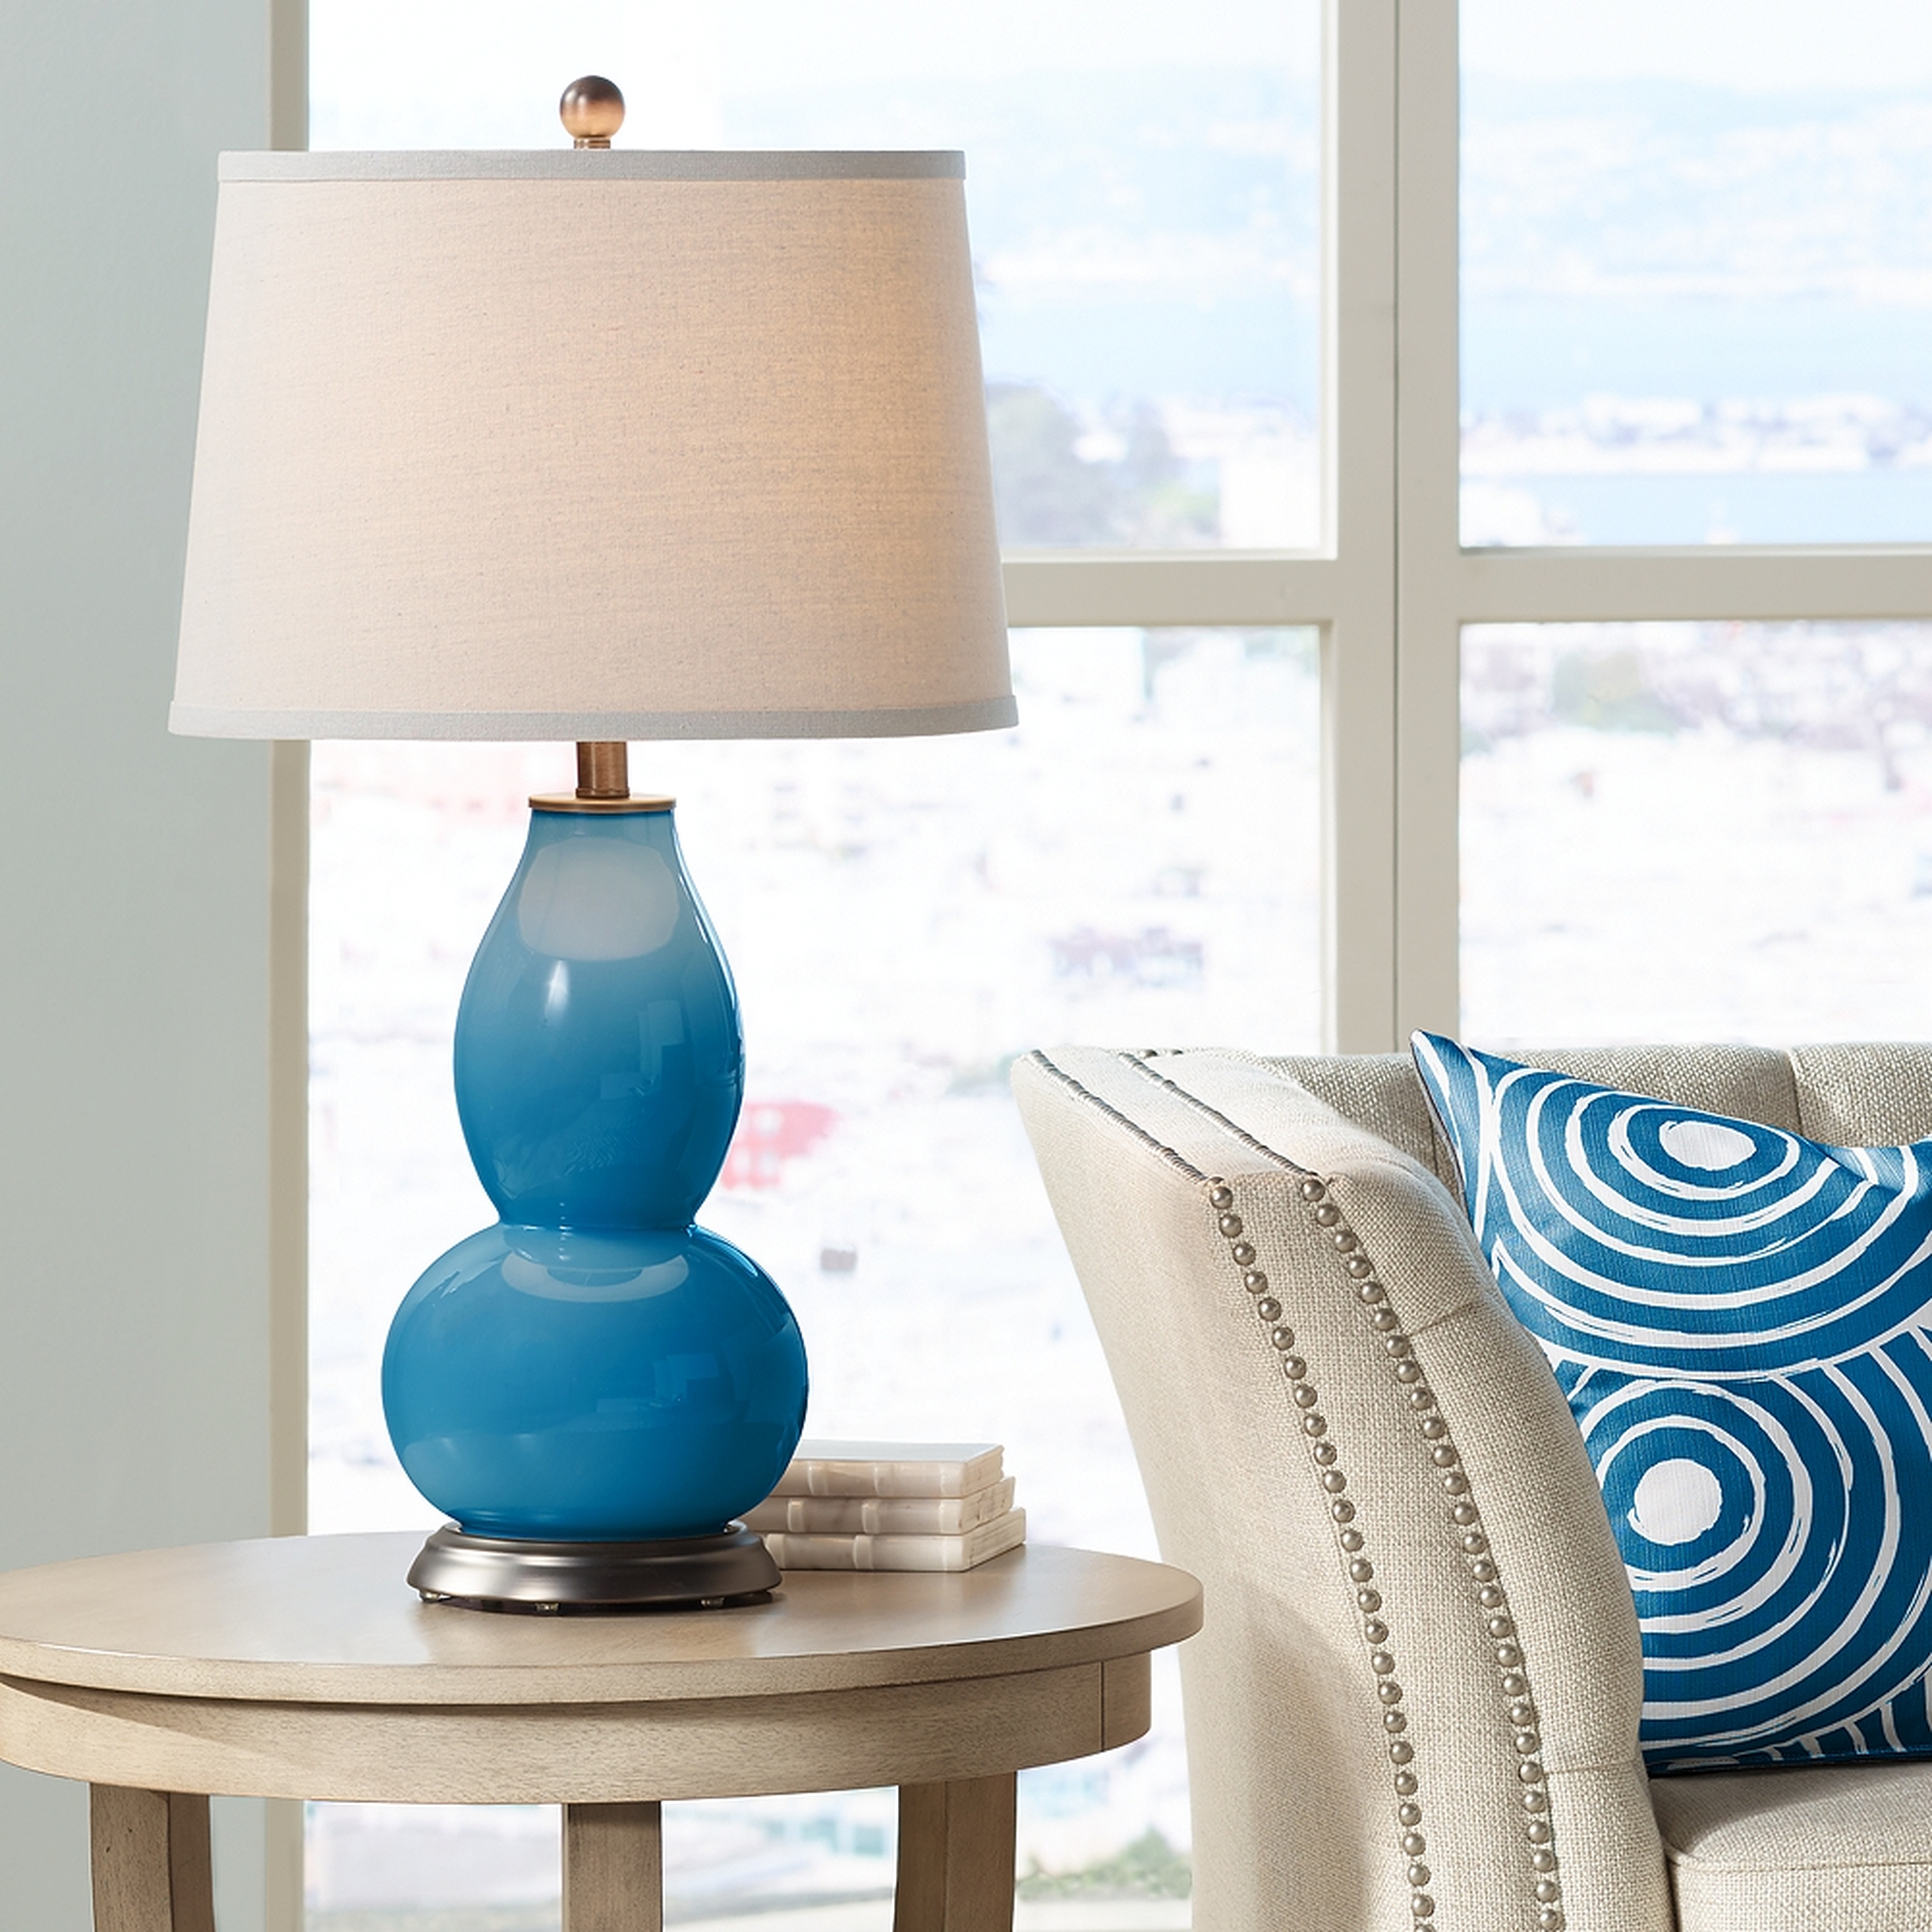 Mykonos Blue Double Gourd Table Lamp - Style # 9V451 - Lamps Plus